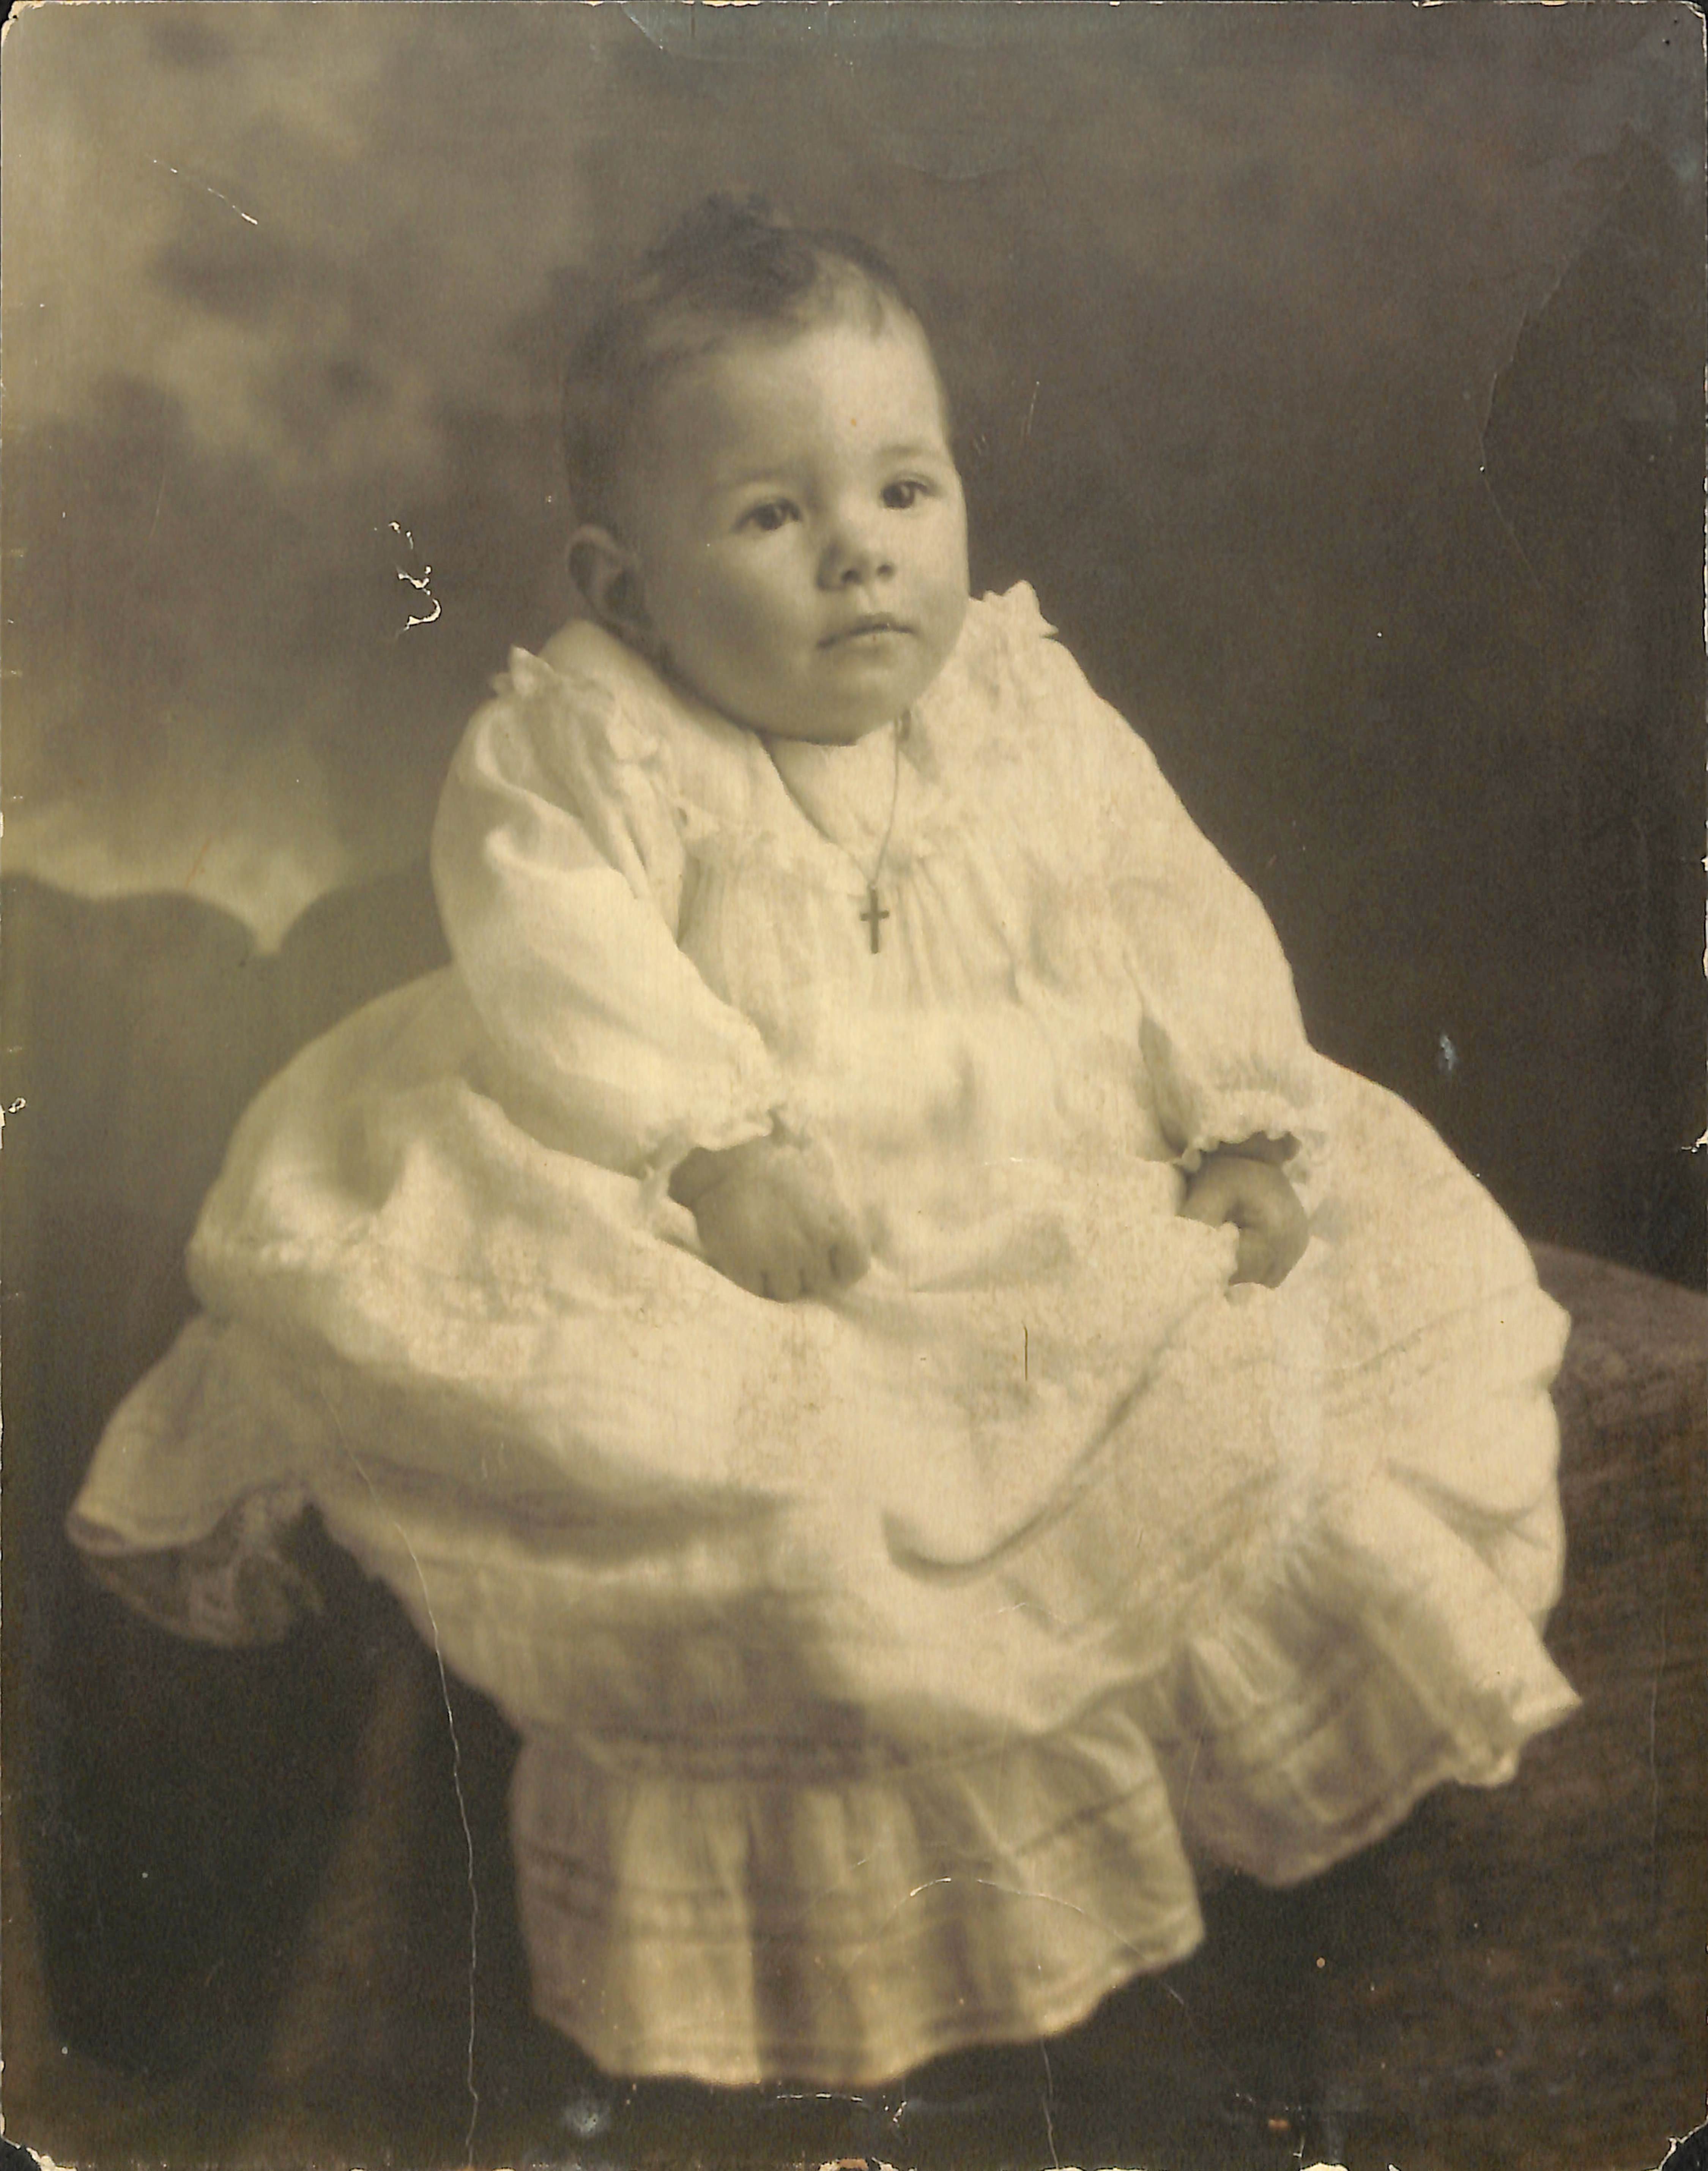 Baby Veronica, 1925